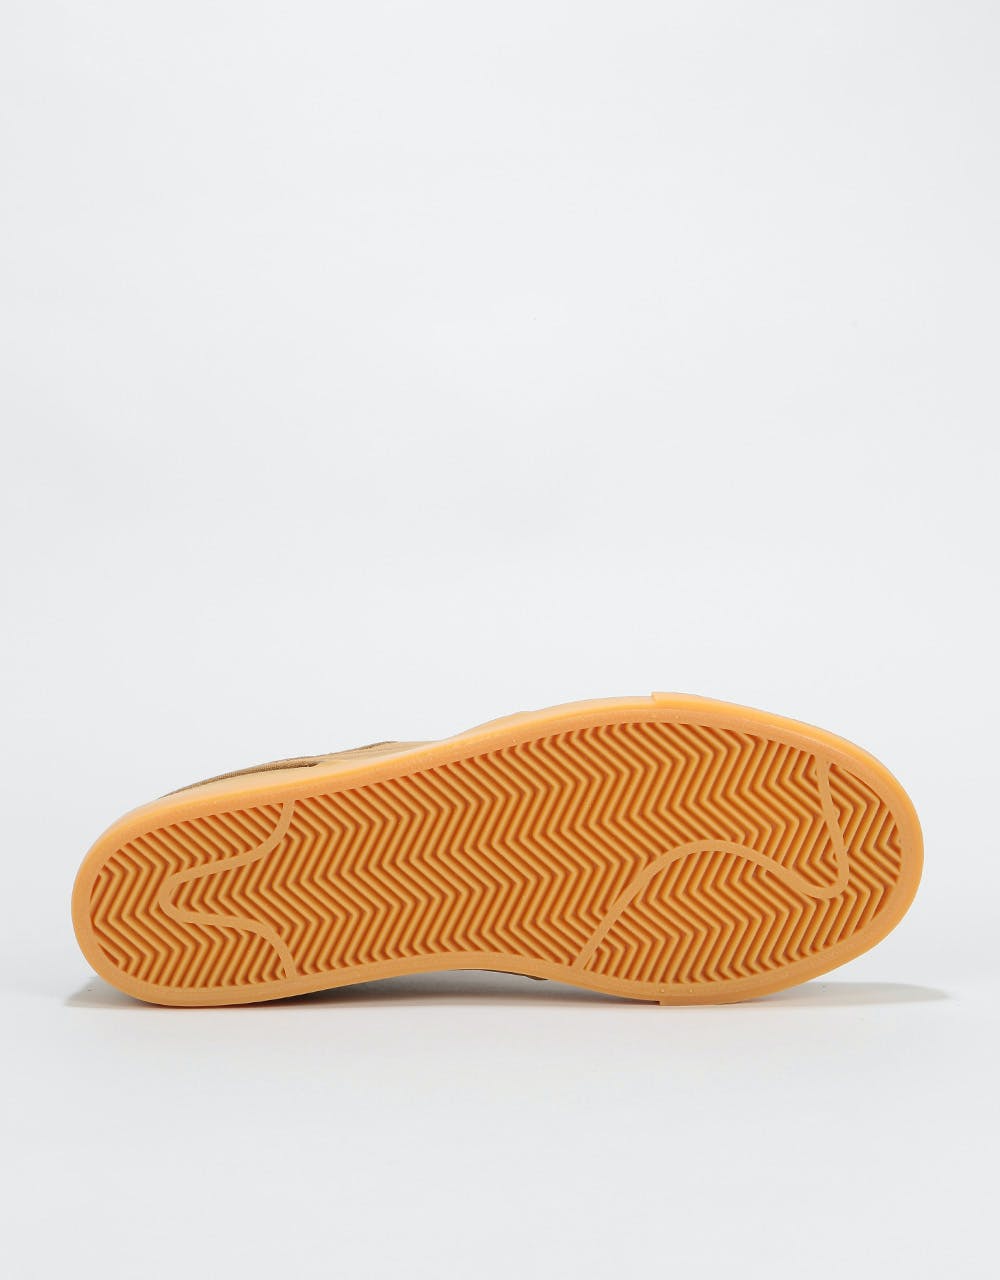 Nike SB Zoom Stefan Janoski Canvas Skate Shoes - Golden Beige/Gum